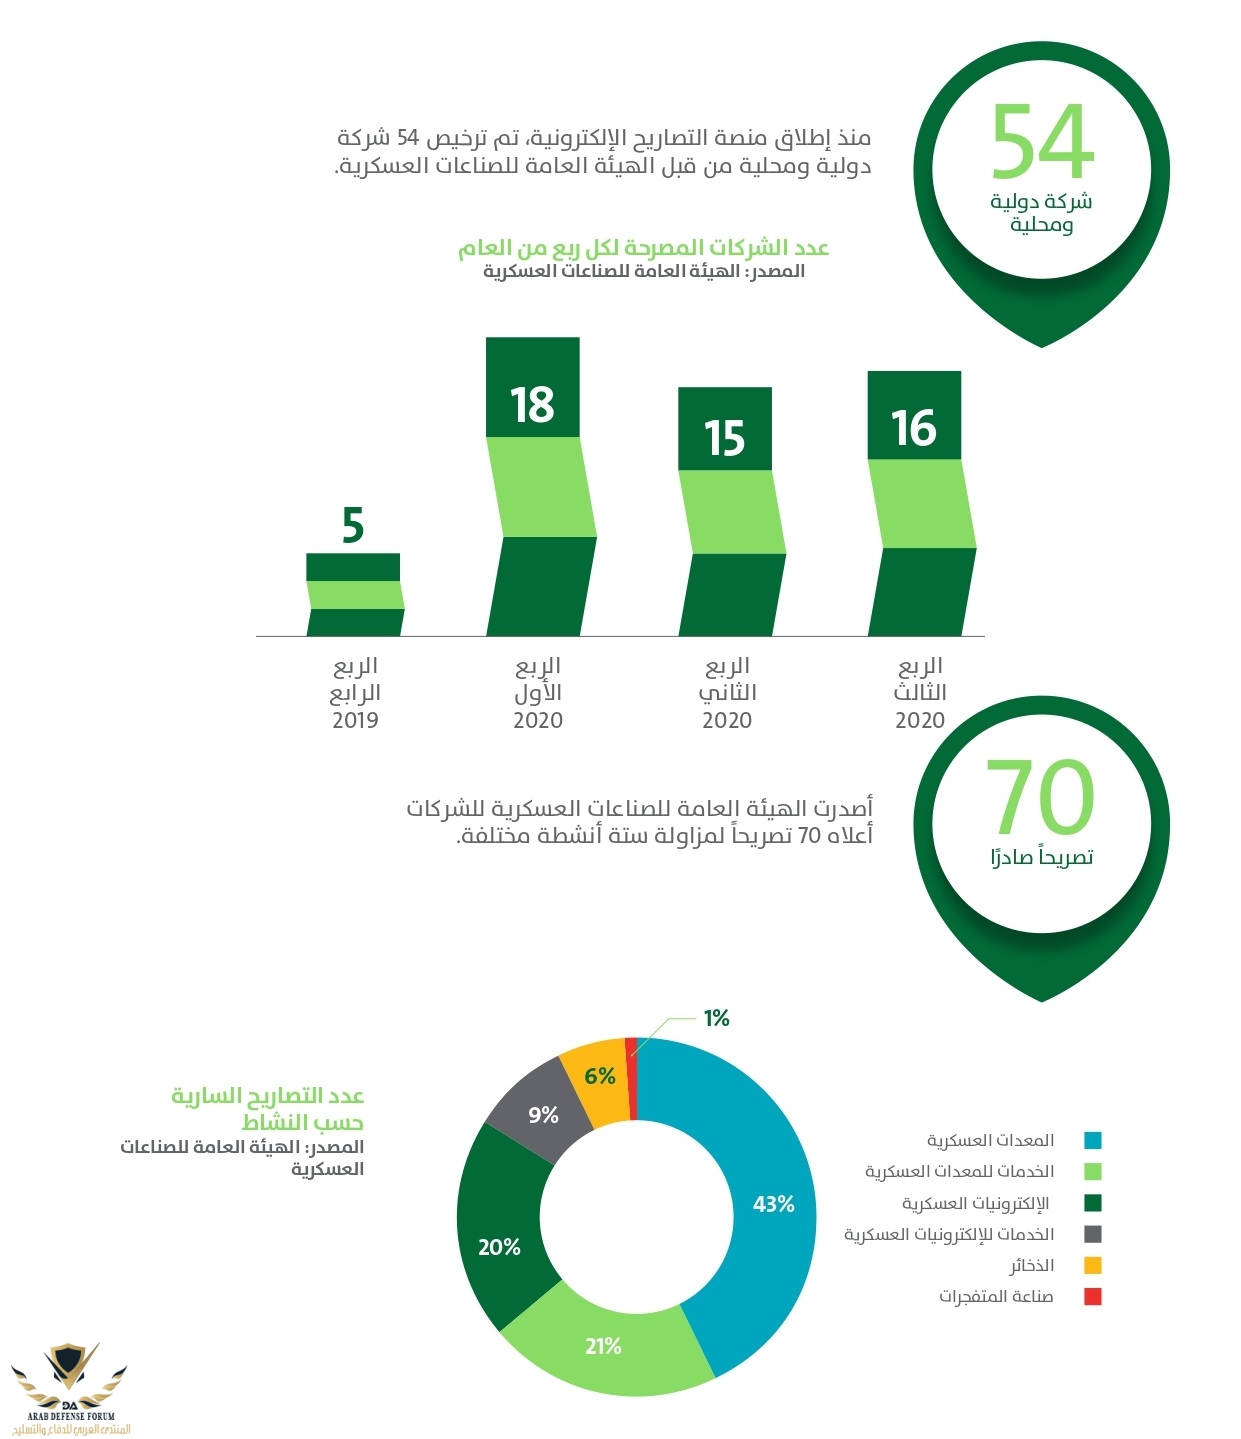 invest-saudi-investment-highlights-fall-2020-arabic-digital-4_page-0027.jpg